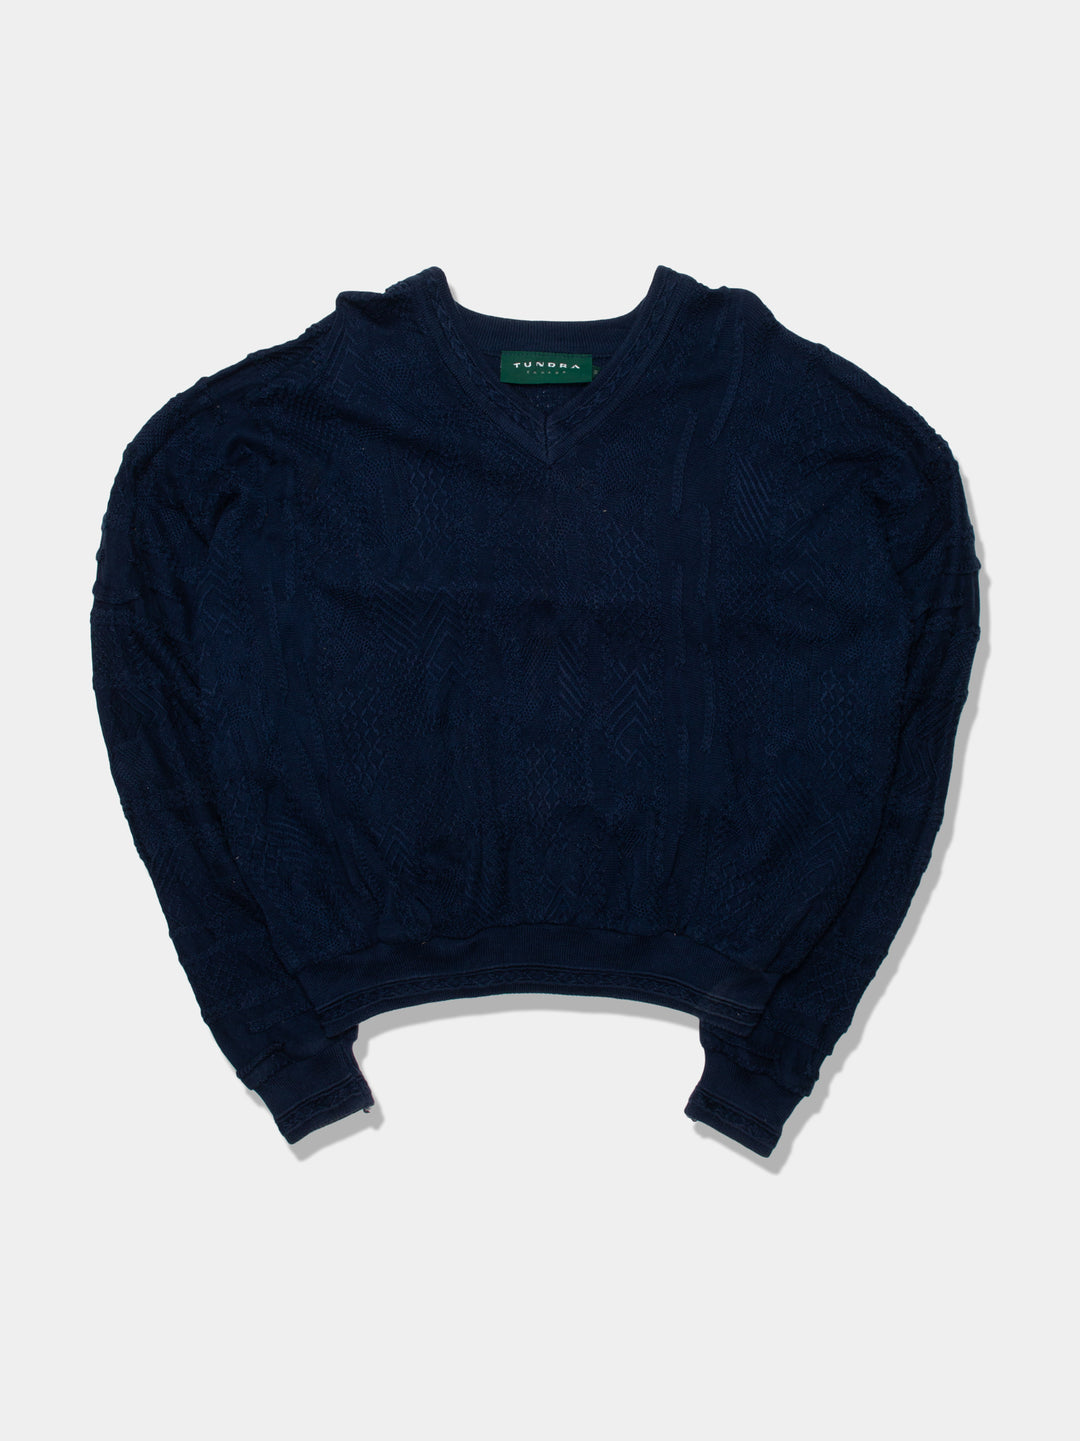 Vintage Coogi Style Sweater (M)